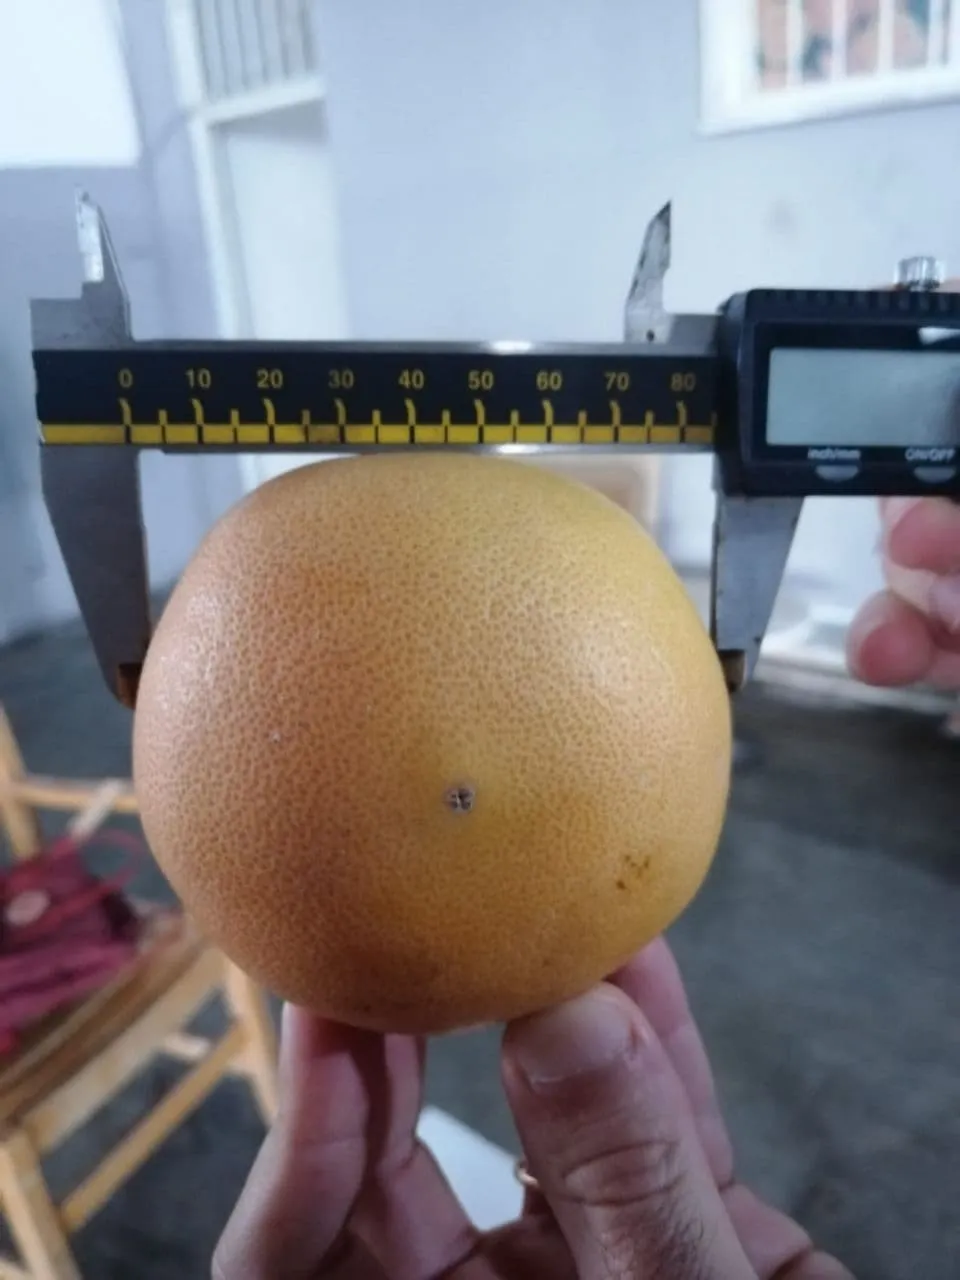 апельсин Мандарин Лимон Грейпфрут 0.60 $ в Турции 10